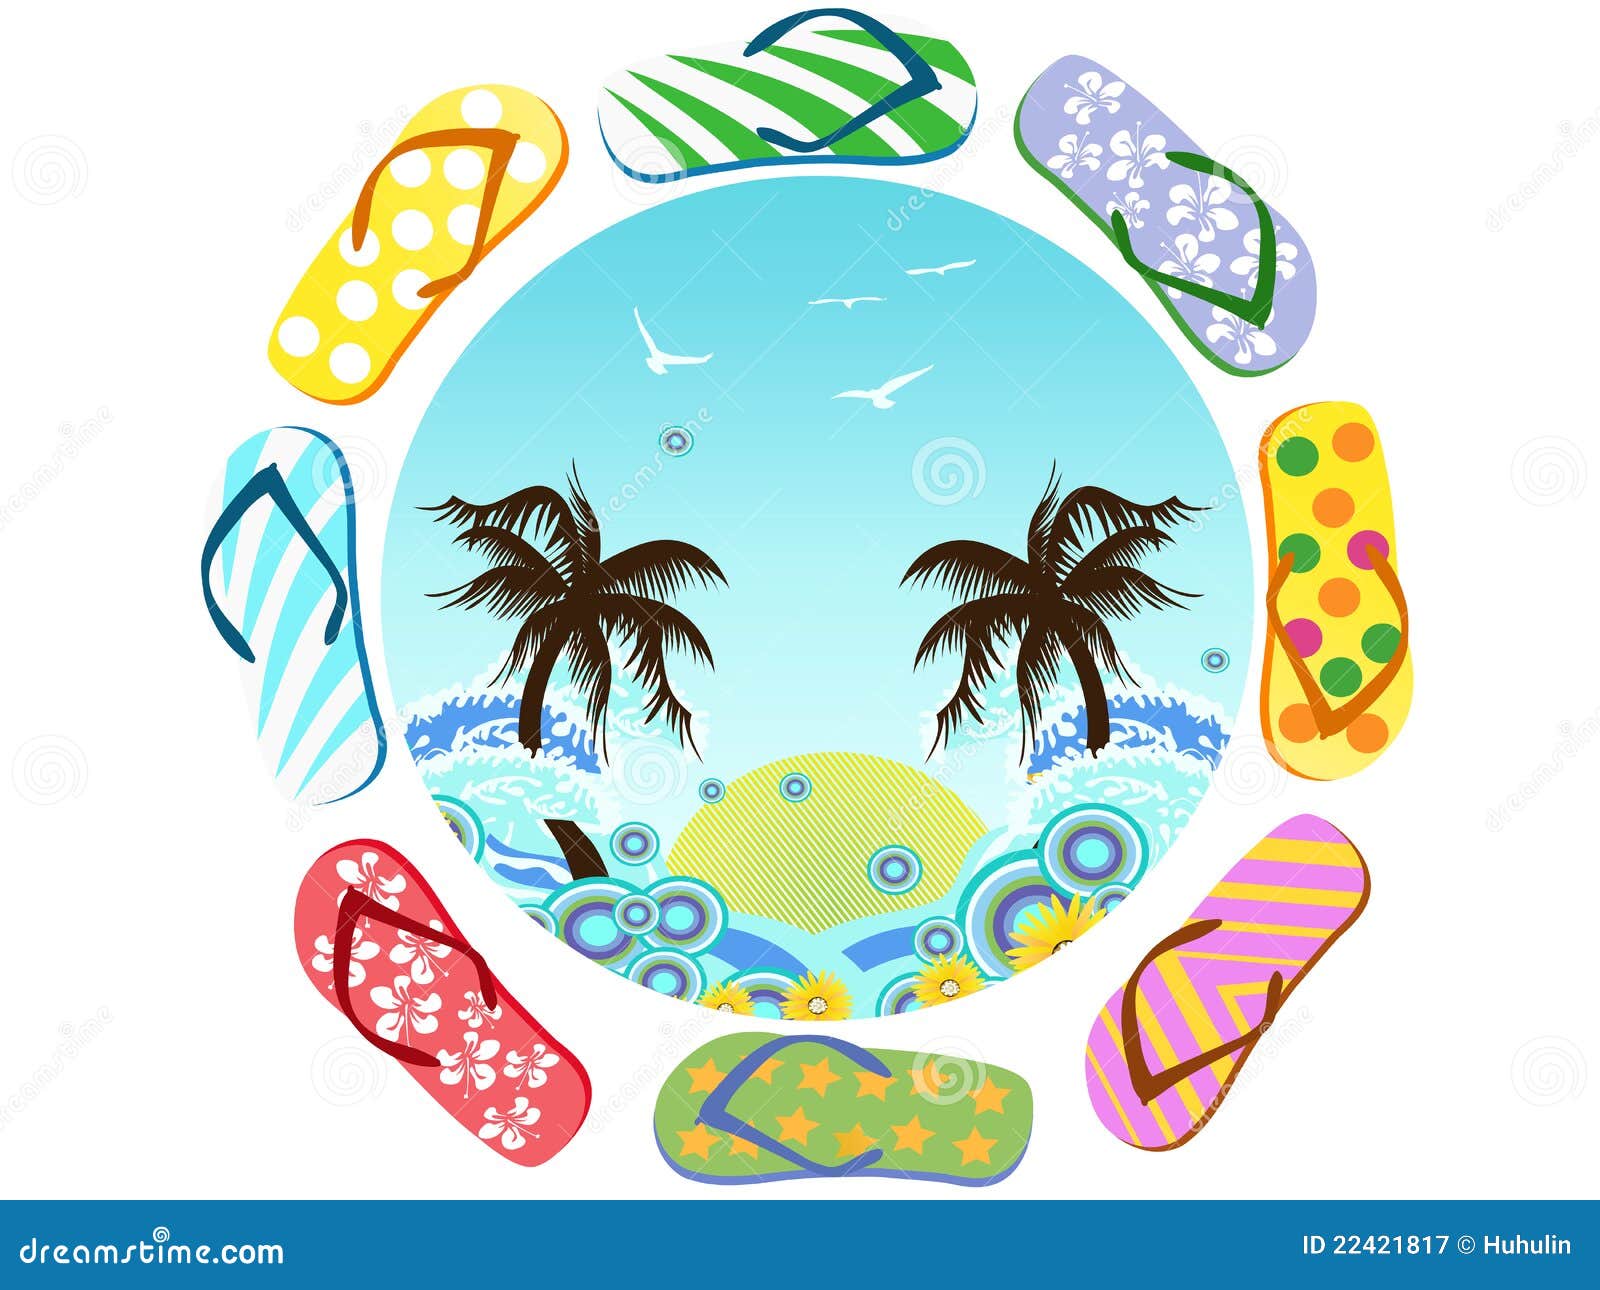 Flip Flops around summer stock vector. Illustration of island - 22421817